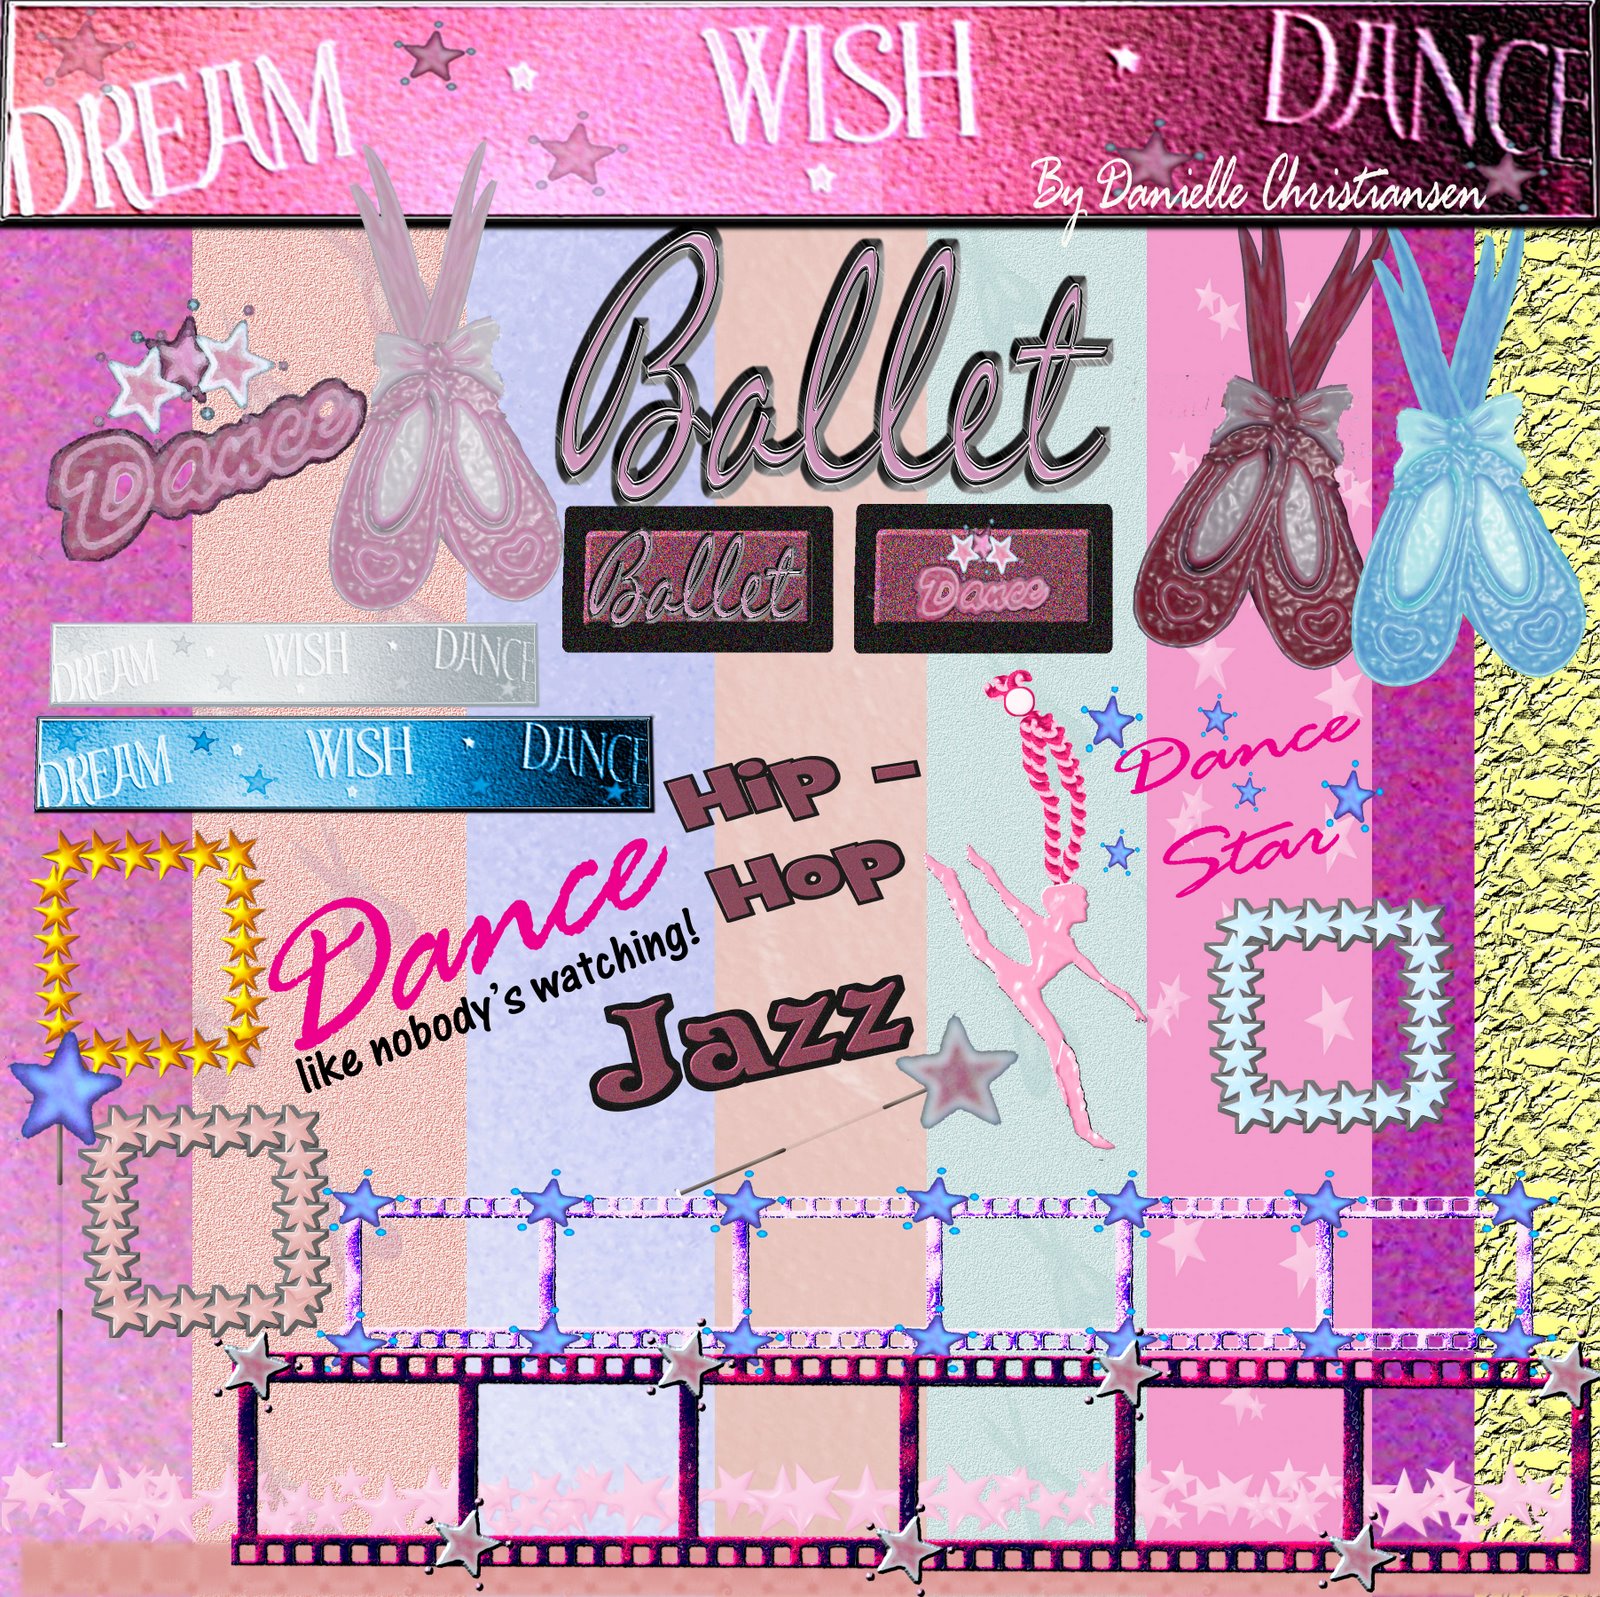 [dream+wish+dance+kit.jpg]